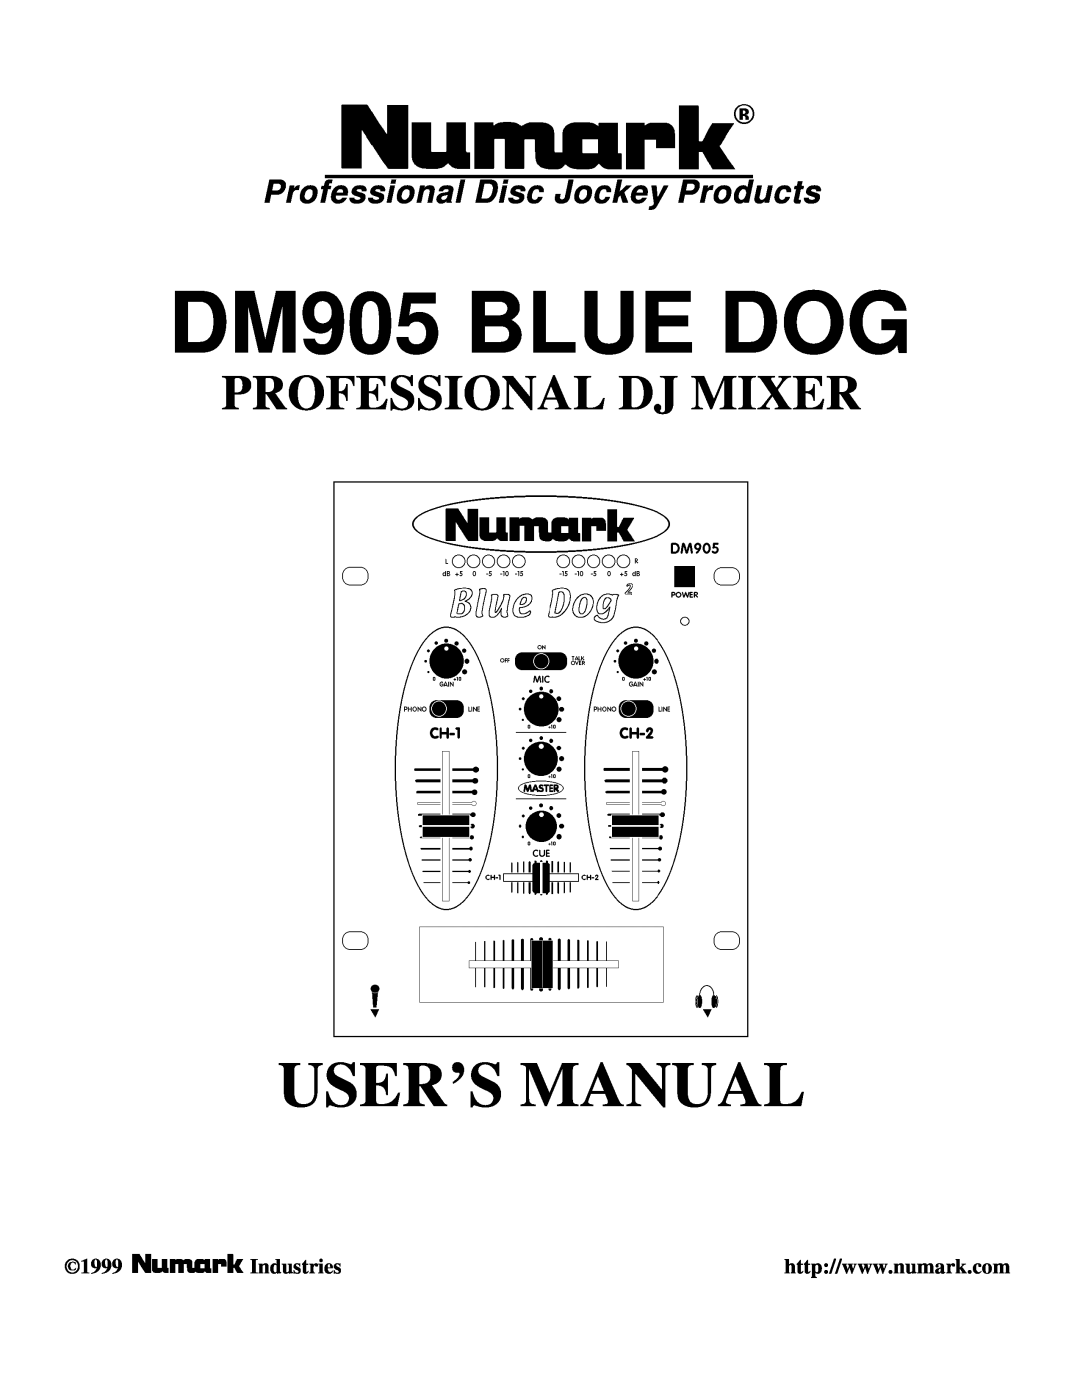 Numark Industries user manual Professional Disc Jockey Products, DM905 BLUE DOG, Professional Dj Mixer, Industries 